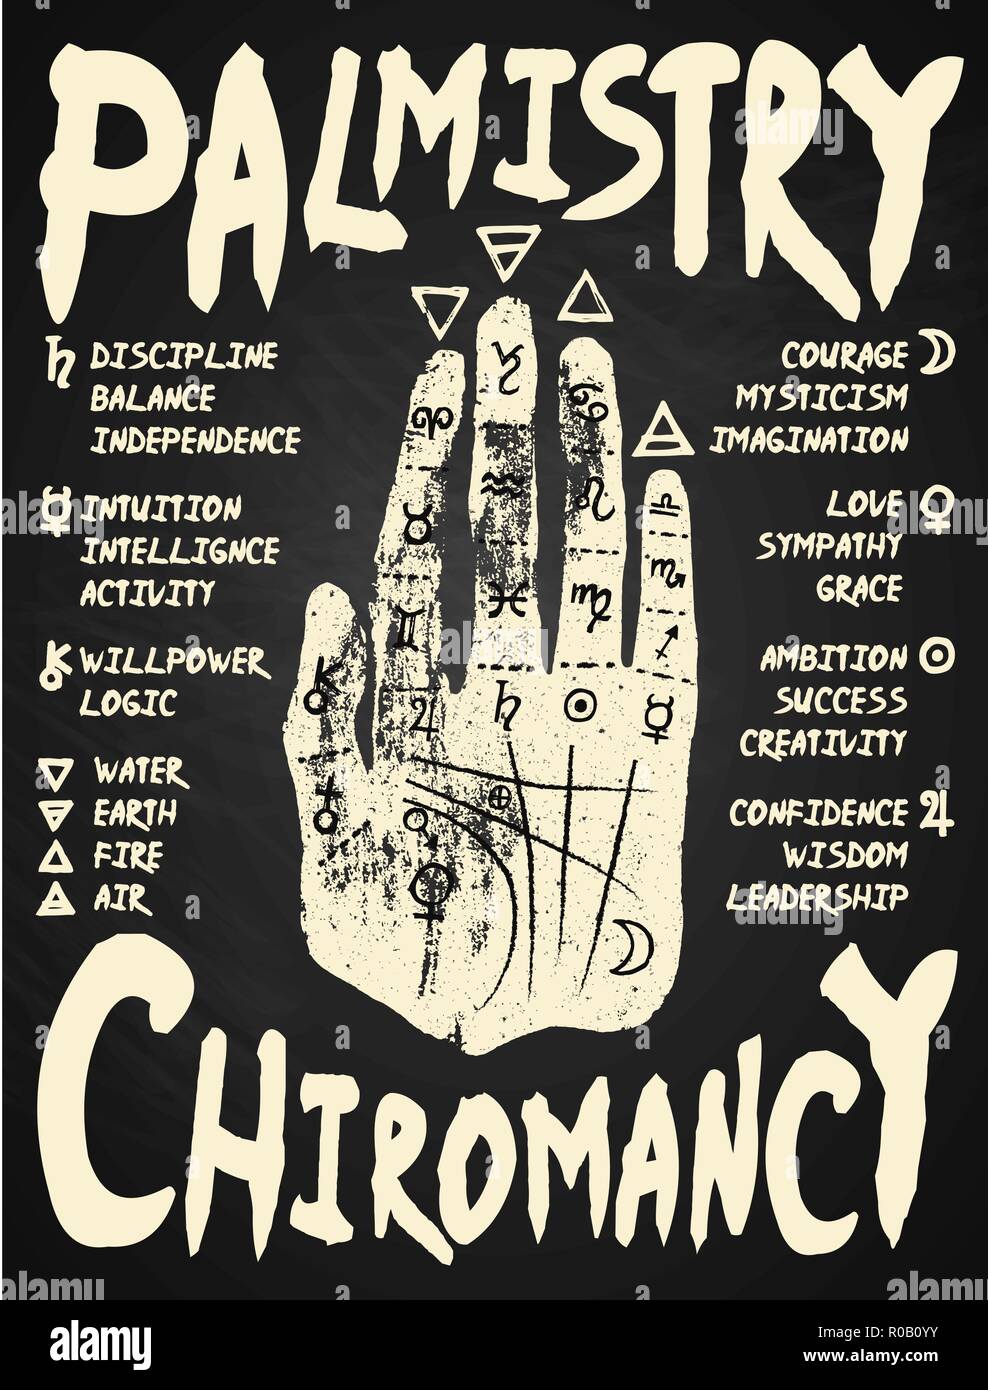 Palmistry, chiromancy. White on a blackboard background. Poster print design, vector illustration. Stock Vector